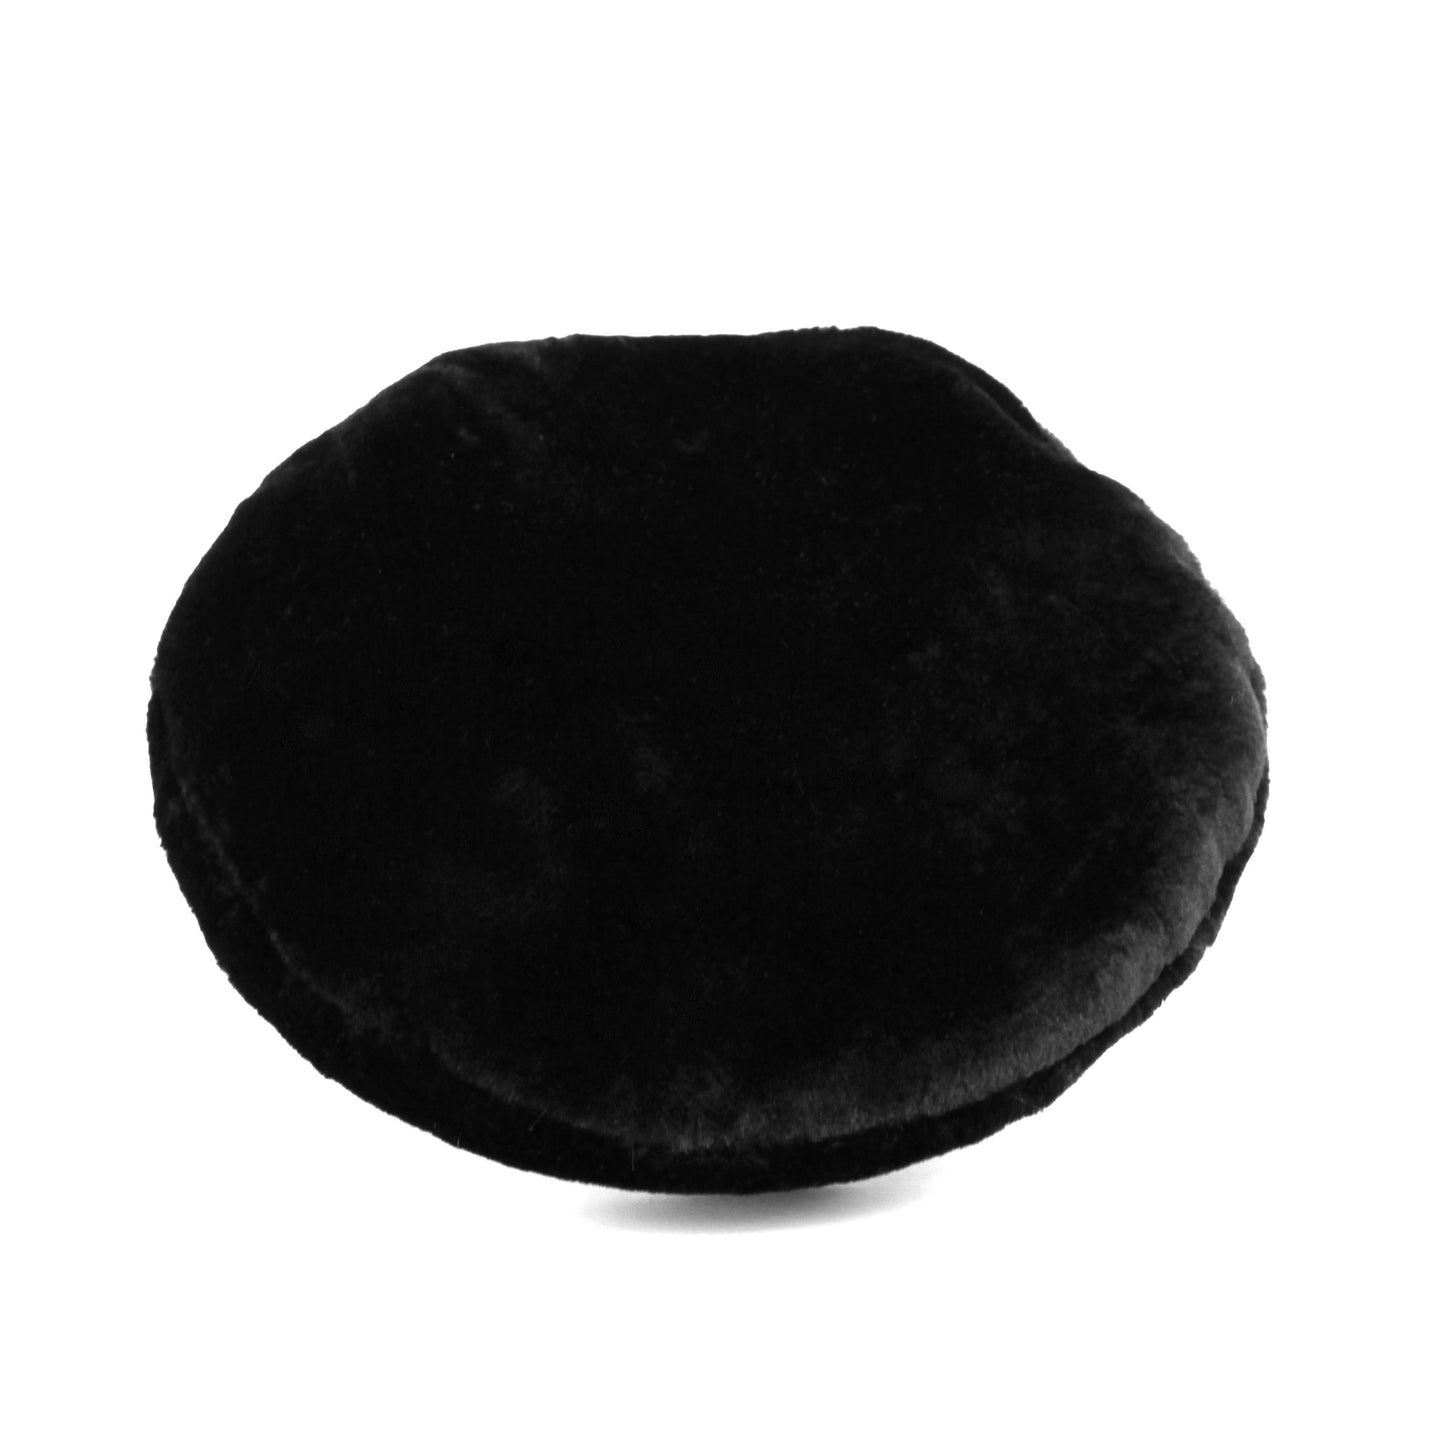 "BLACK" French beret hat